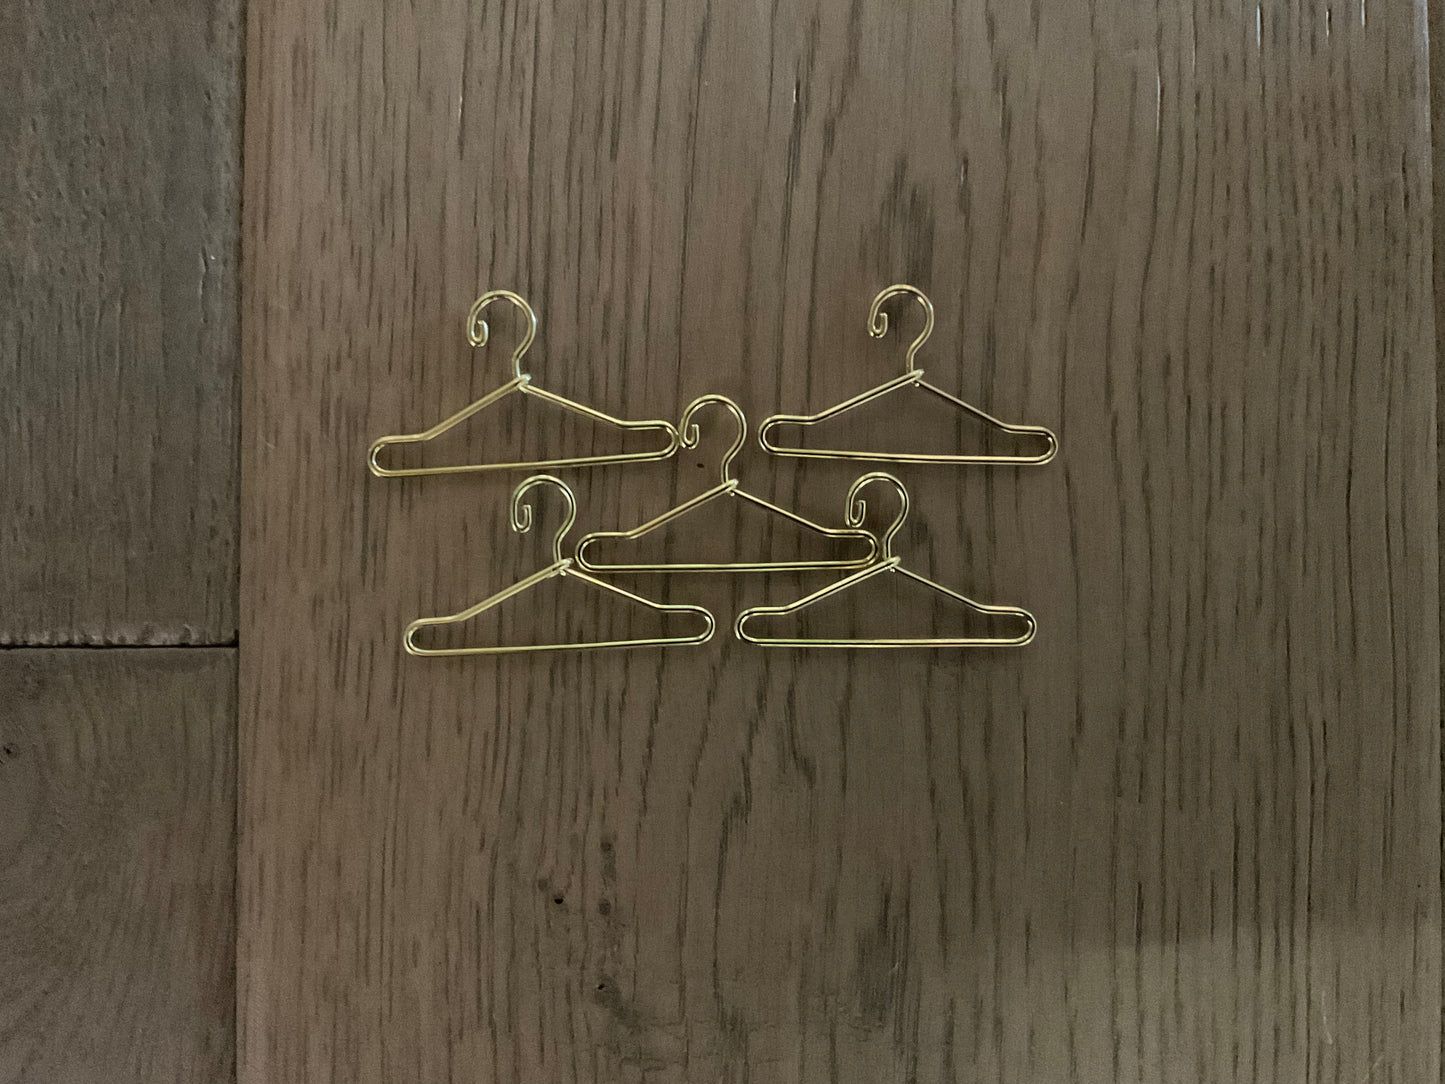 Mini Hangers for Ornaments